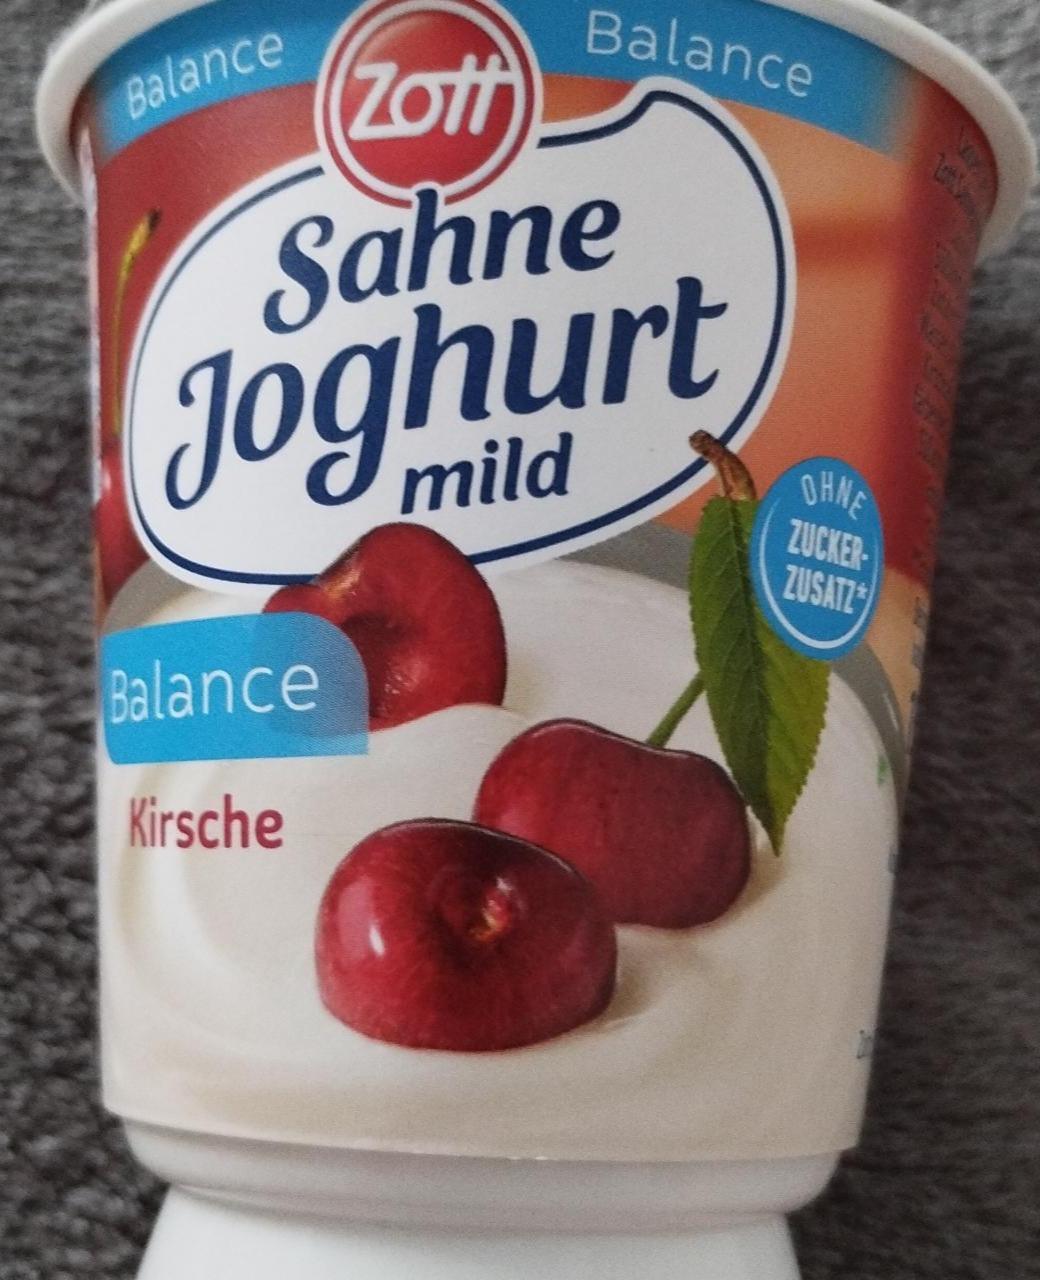 Fotografie - zott sahne joghurt mild balance Kirsch